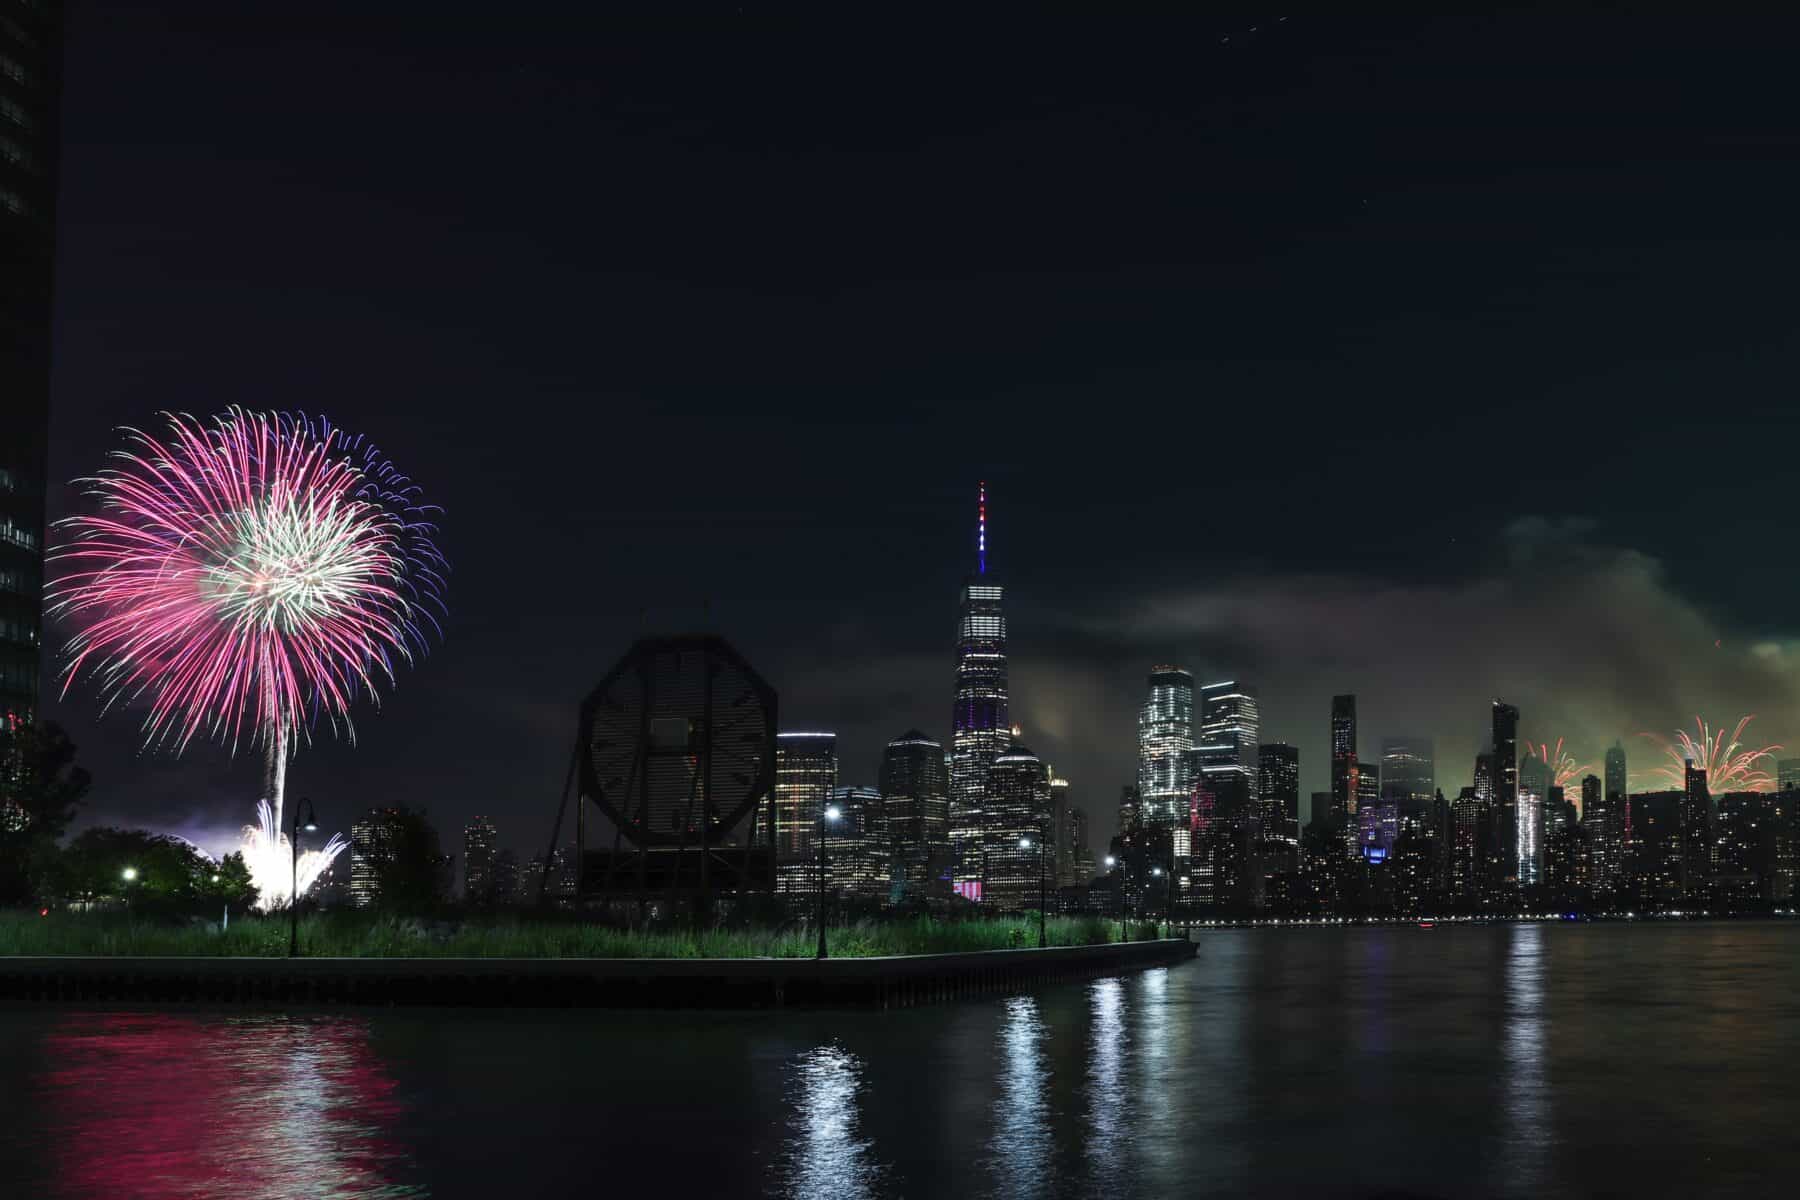 Macys Fireworks as seen from New Jersey